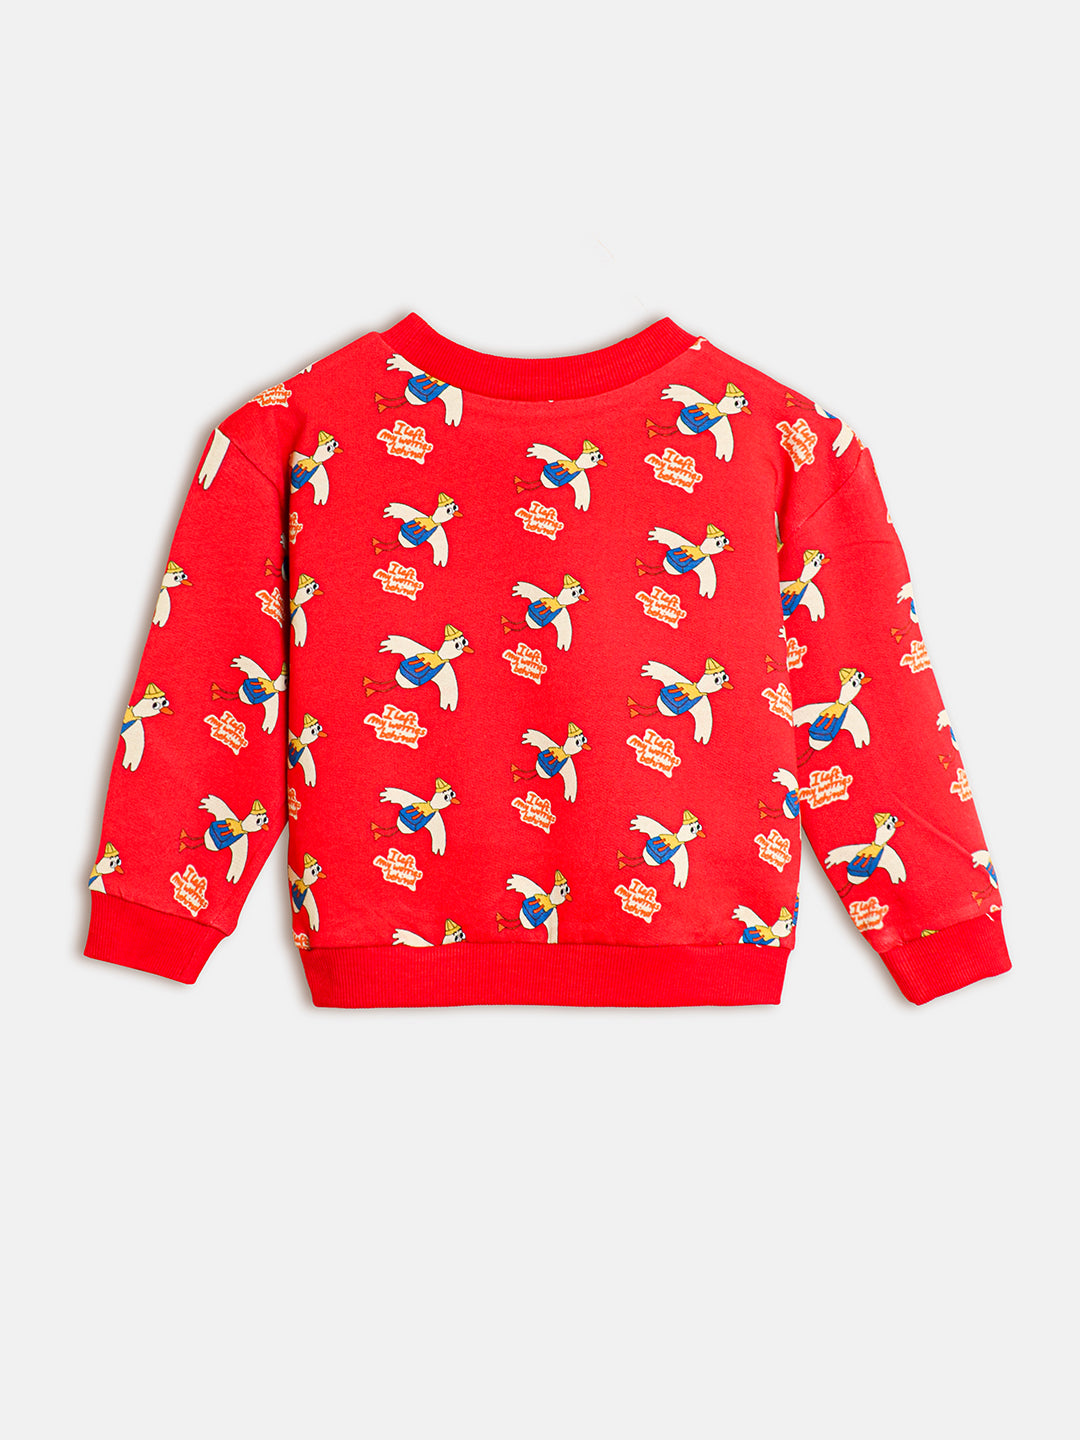 Mr. Birdie All over 2-Piece Sweatshirt Set